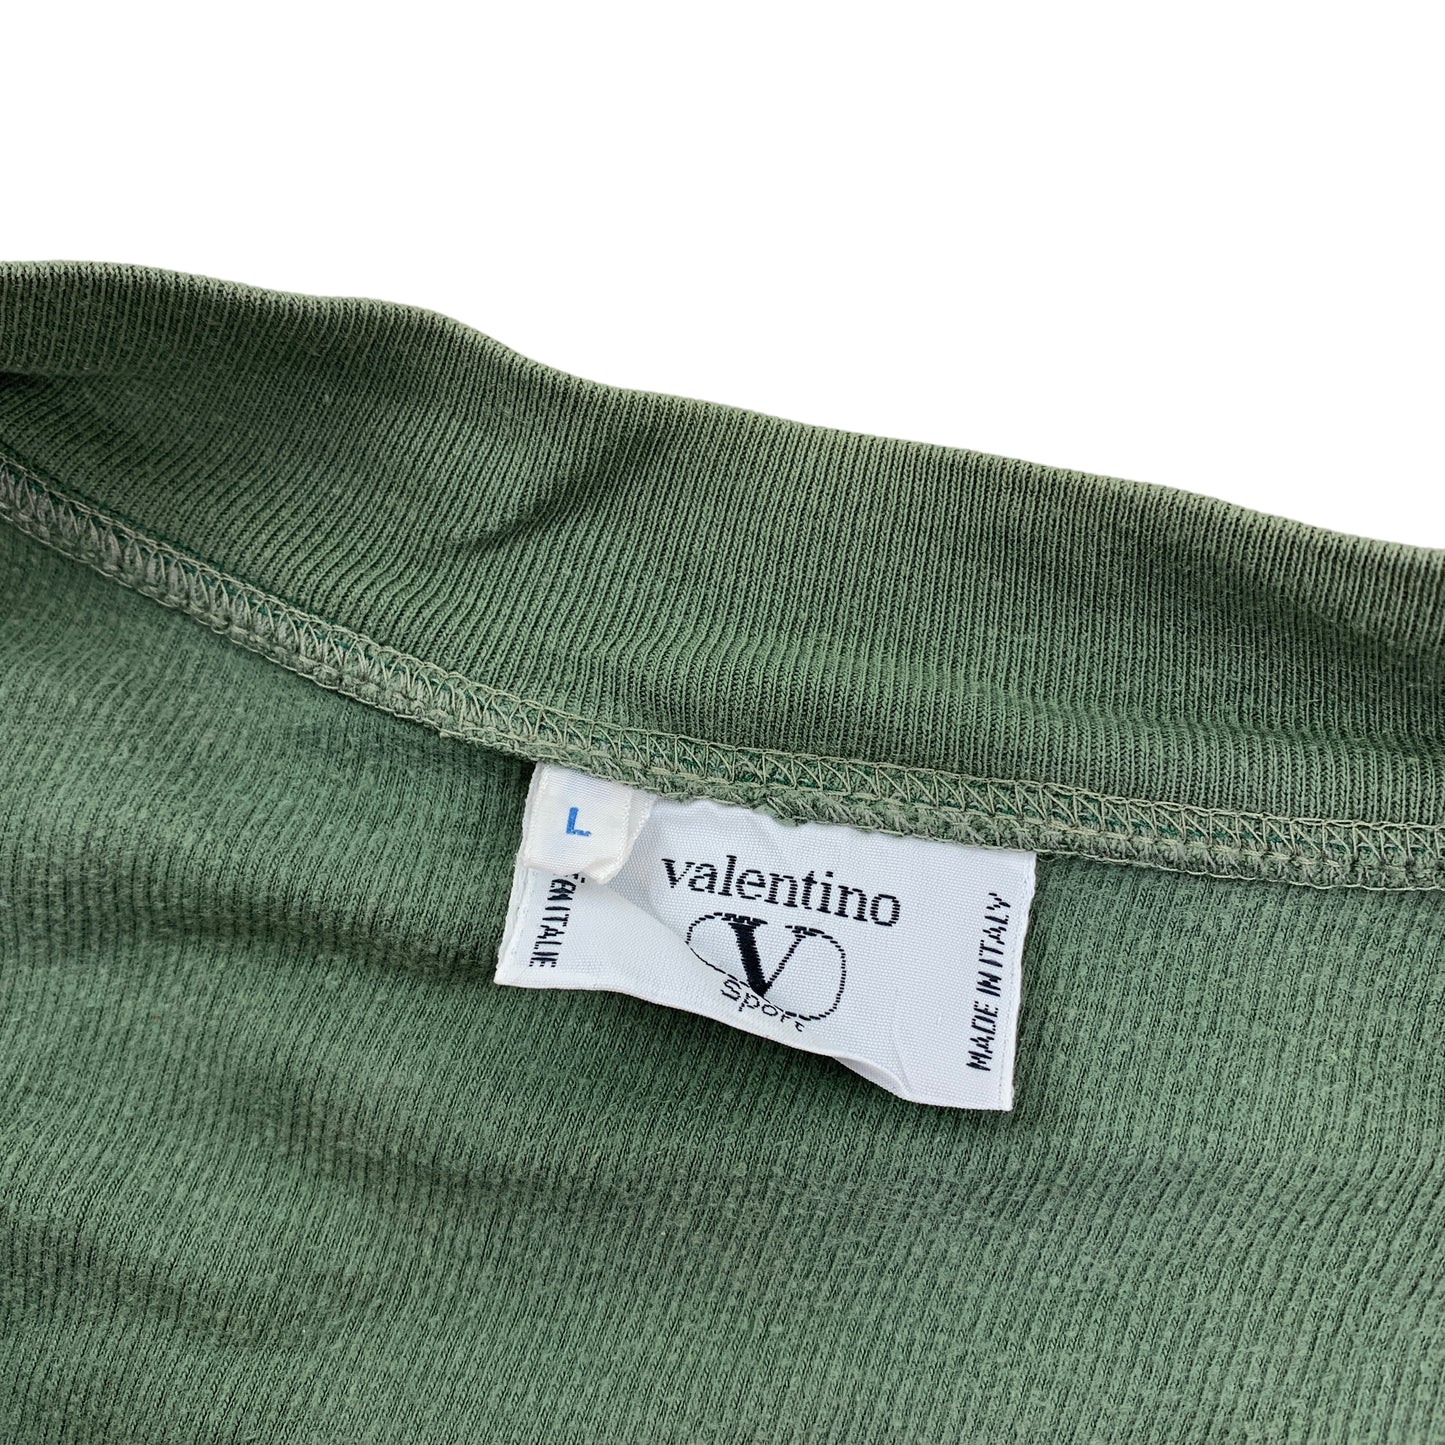 Valentino Cardigan Sweater - L